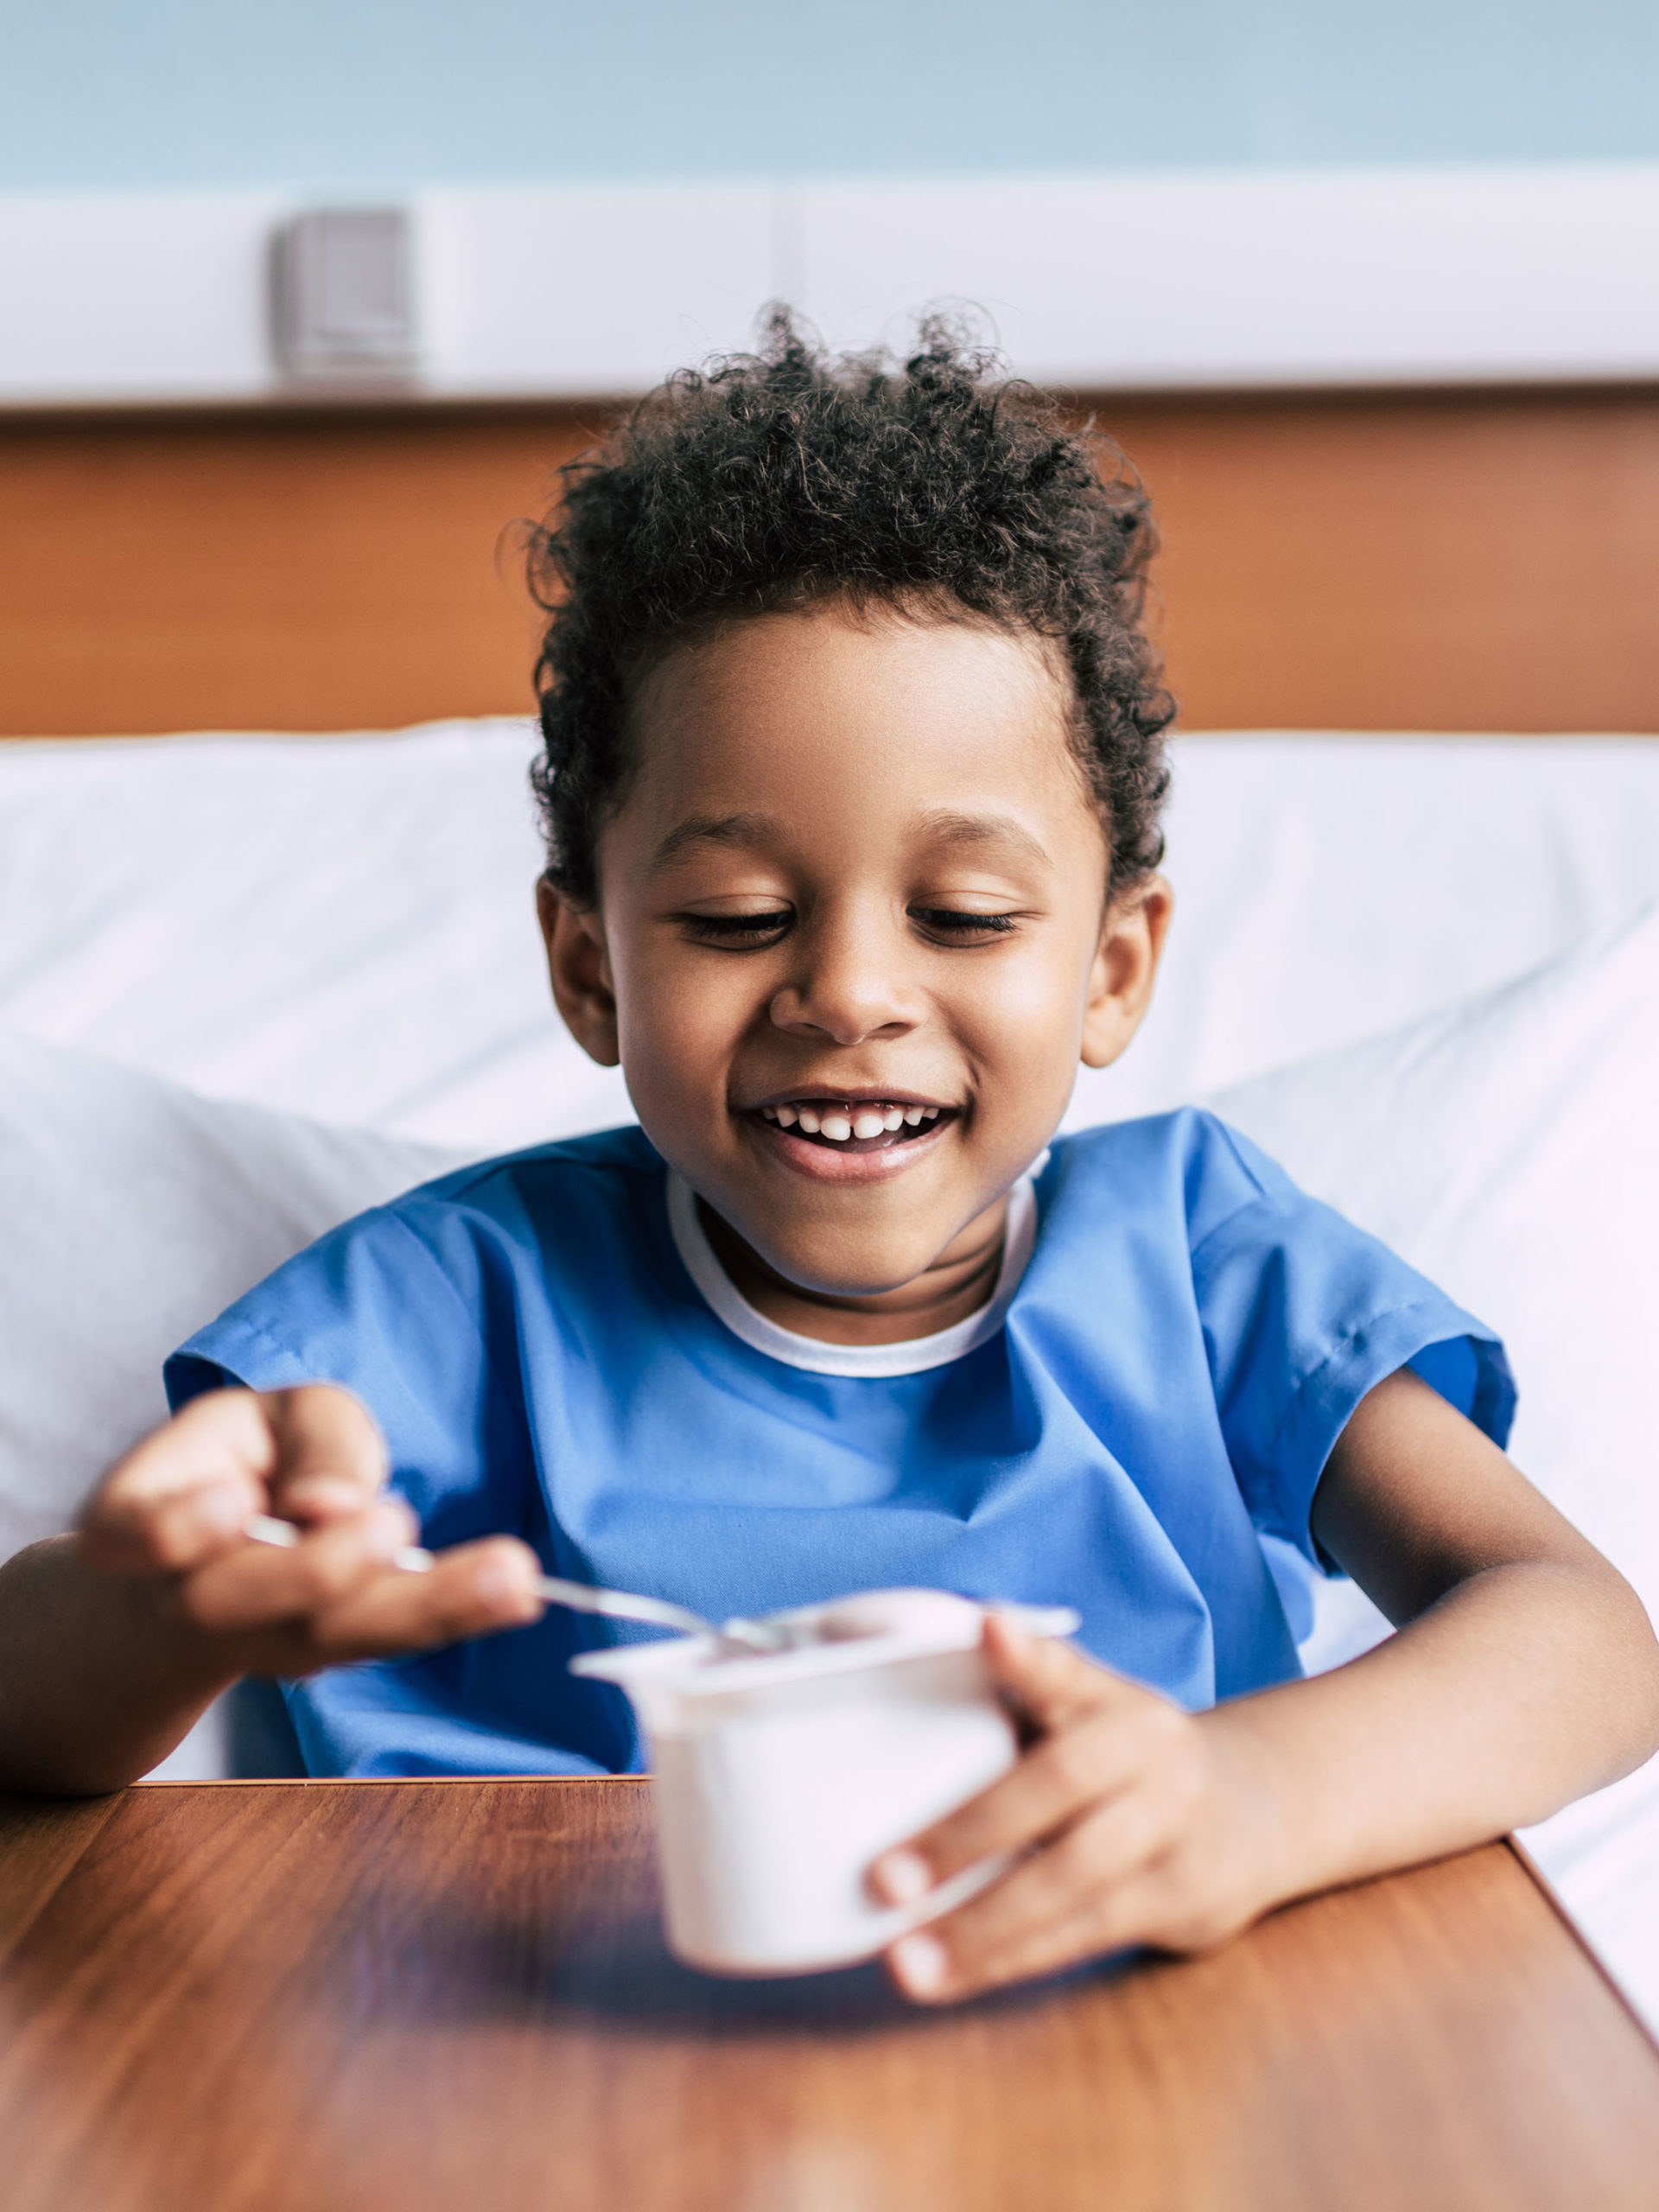 boy eating yogurt while resting in hospital bed